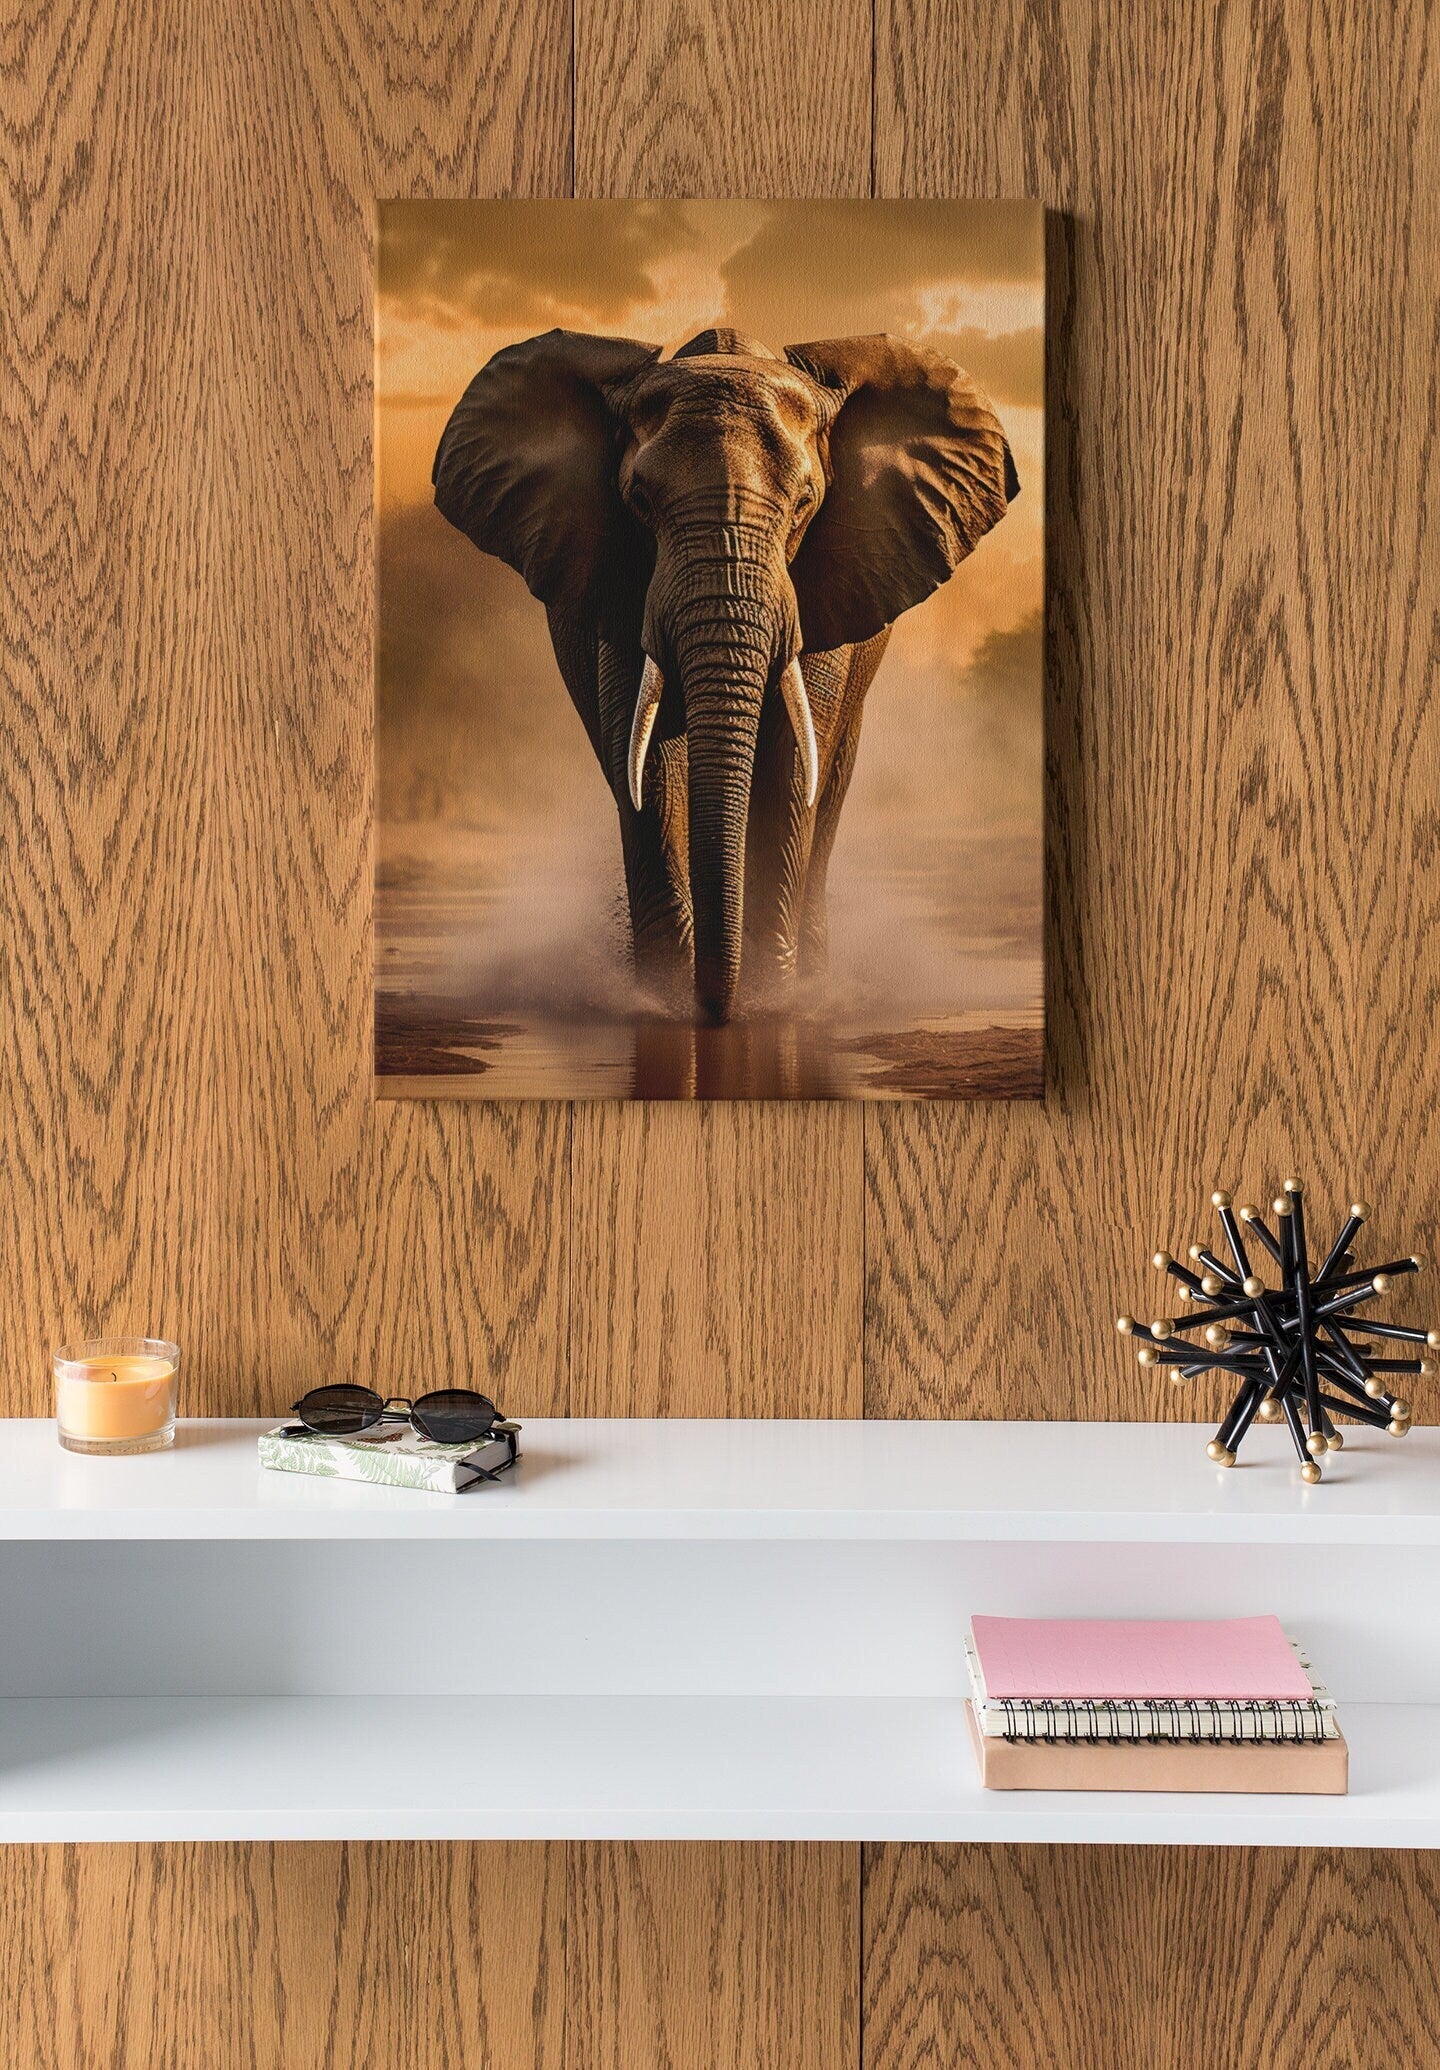 Elephant Canvas -16x20 - 12x16 - 8x10 - 20x16 - 16x12 - 10x8 - Gift -  Landscape Canvas Print or Portrait Canvas Print